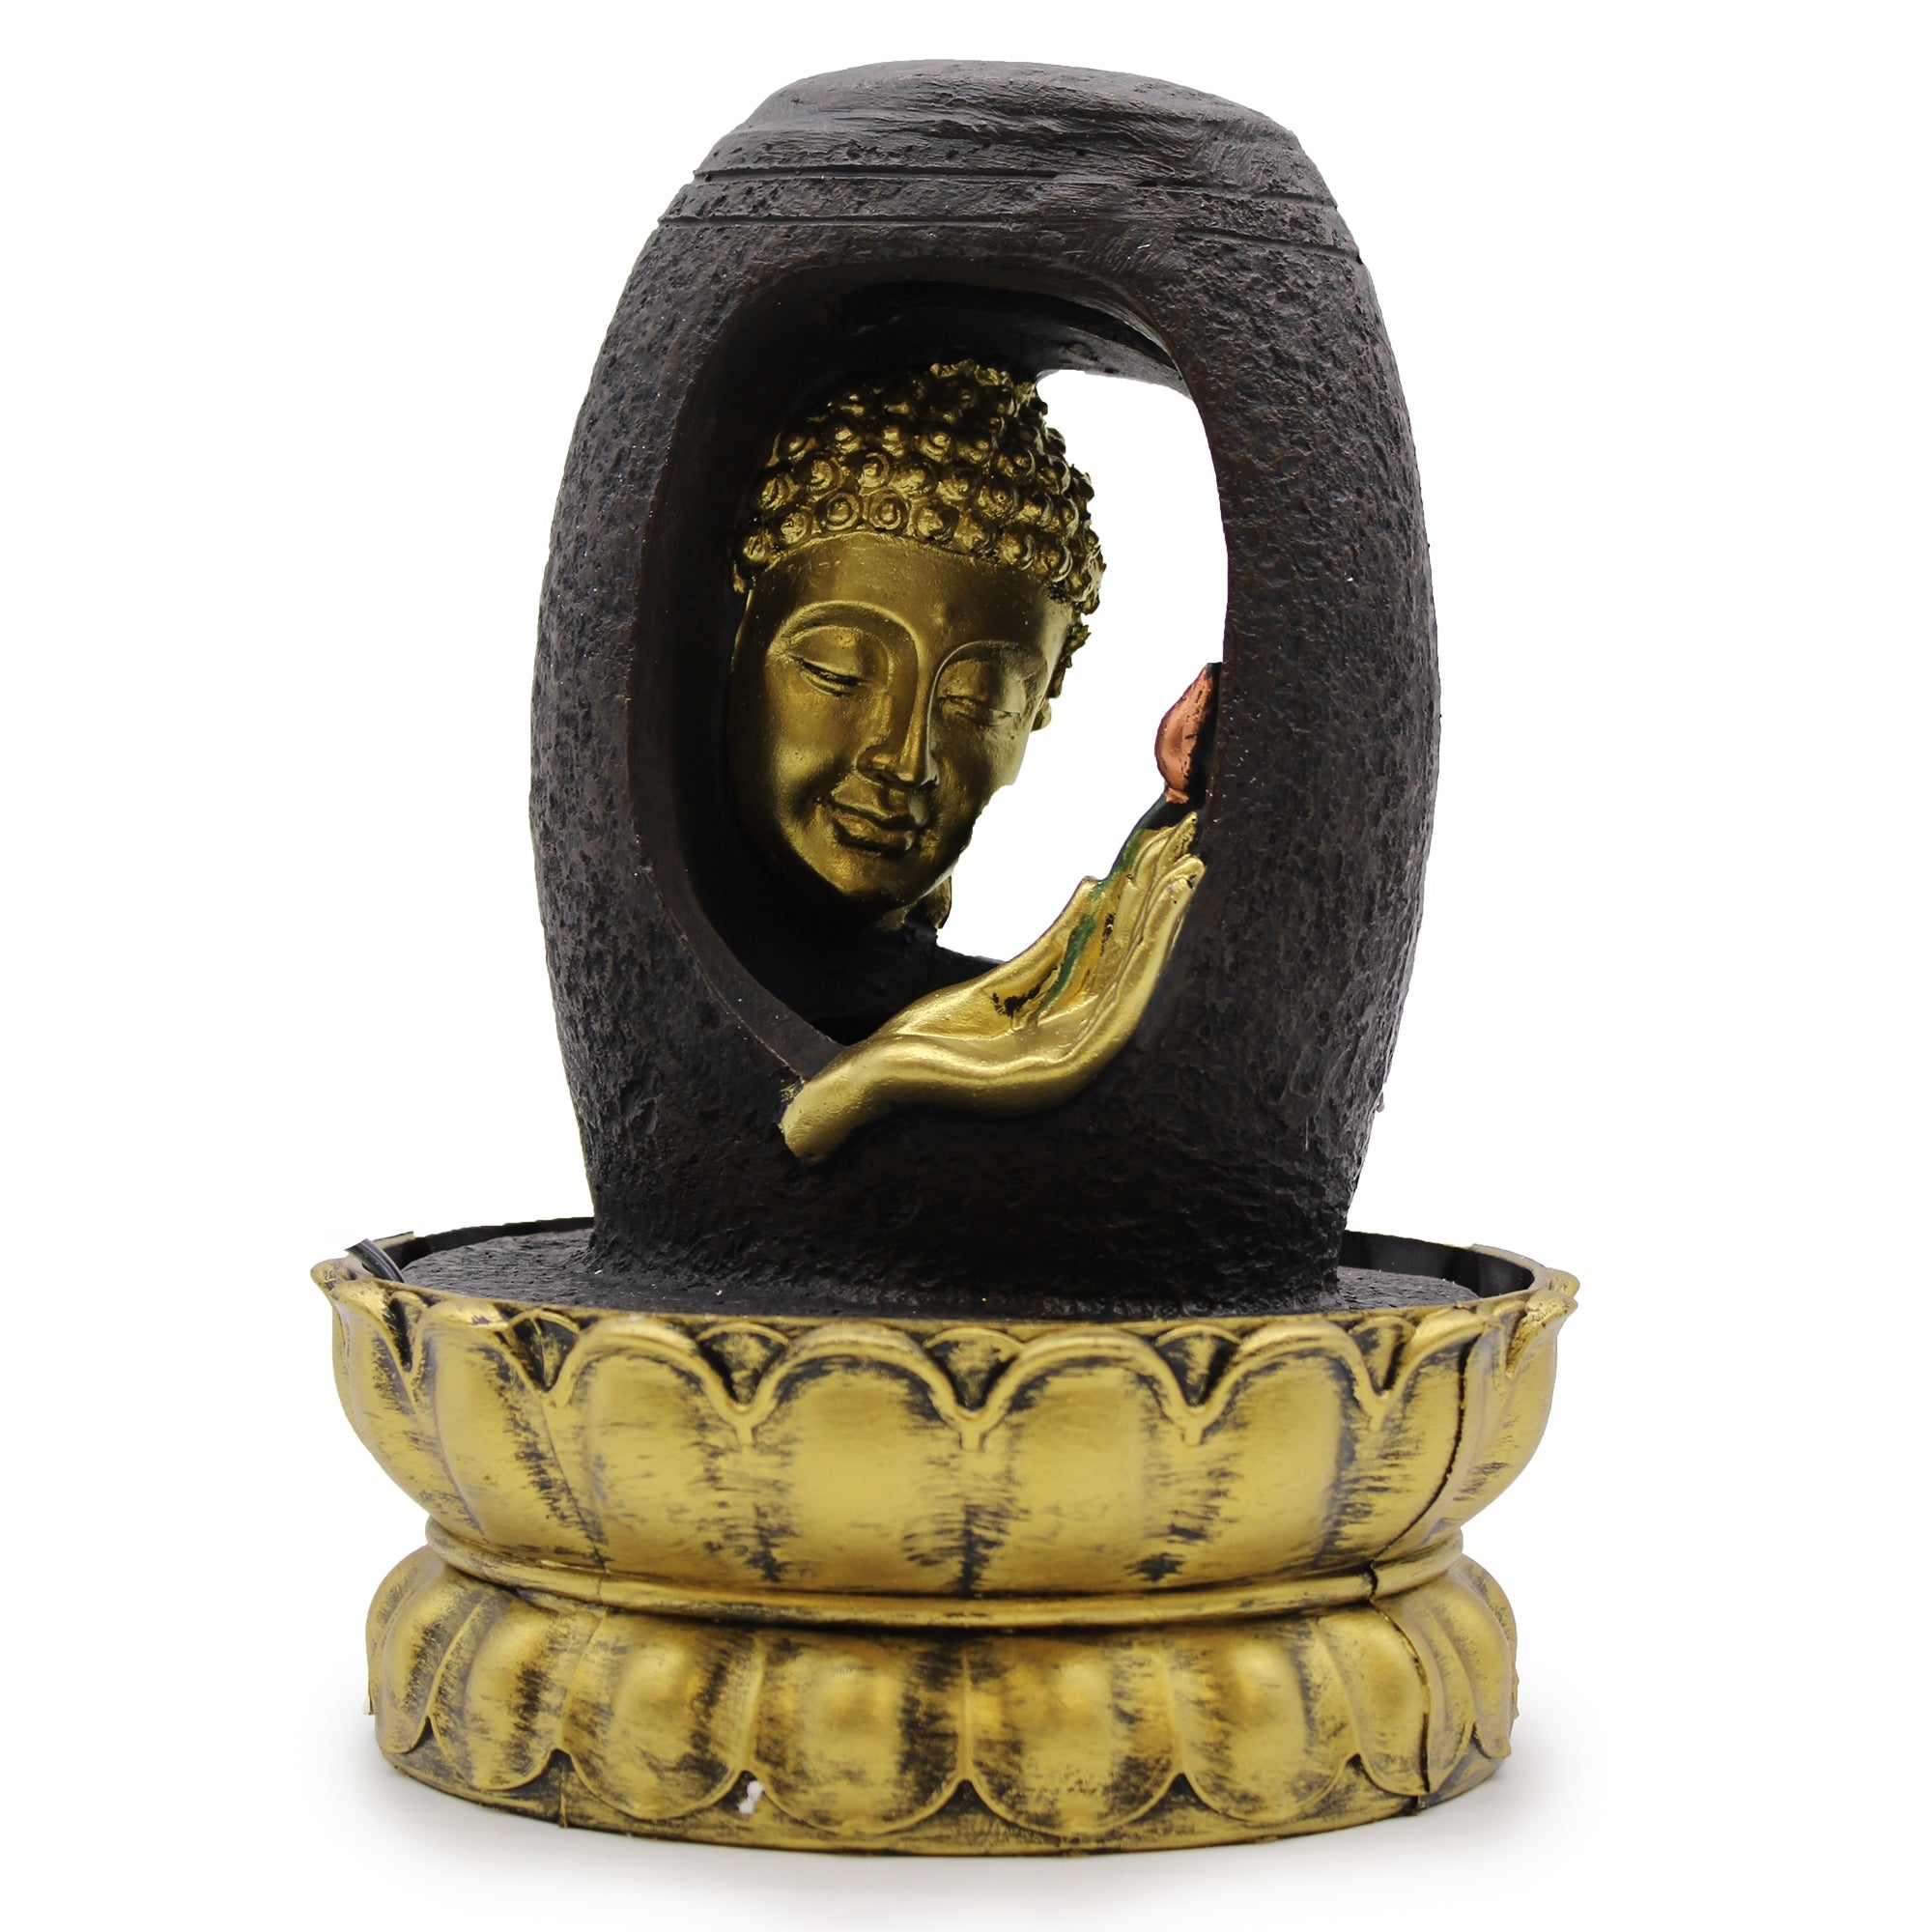 View Tabletop Water Feature 30cm Golden Buddha Vitarka Mudra information